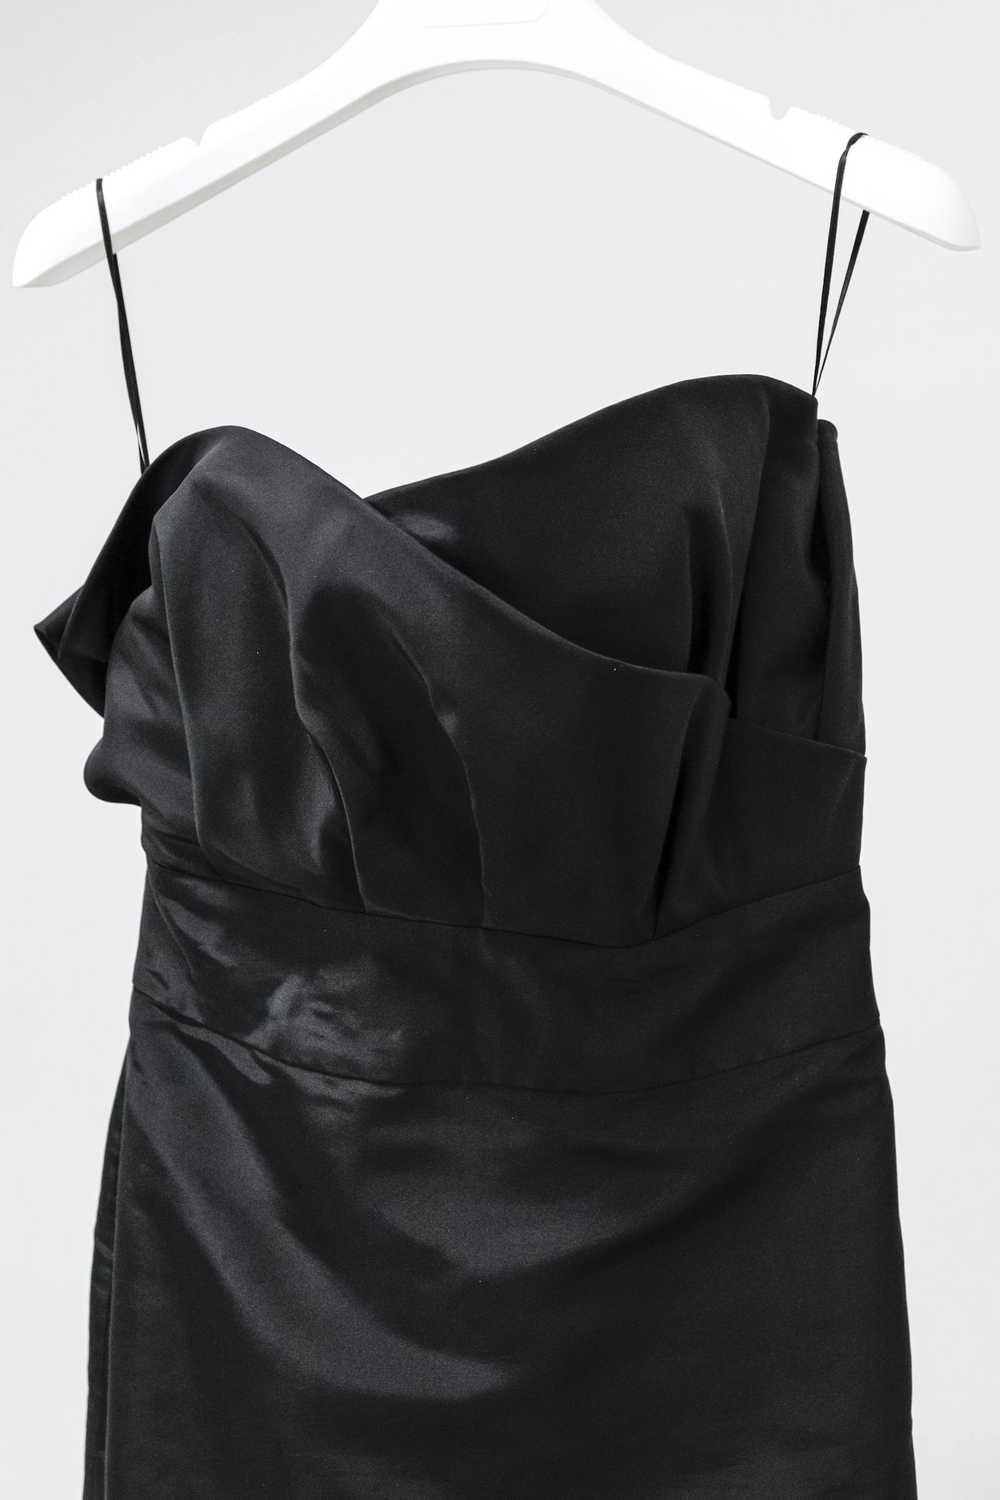 Designer Jacques Fath Black Silk Gown - image 3